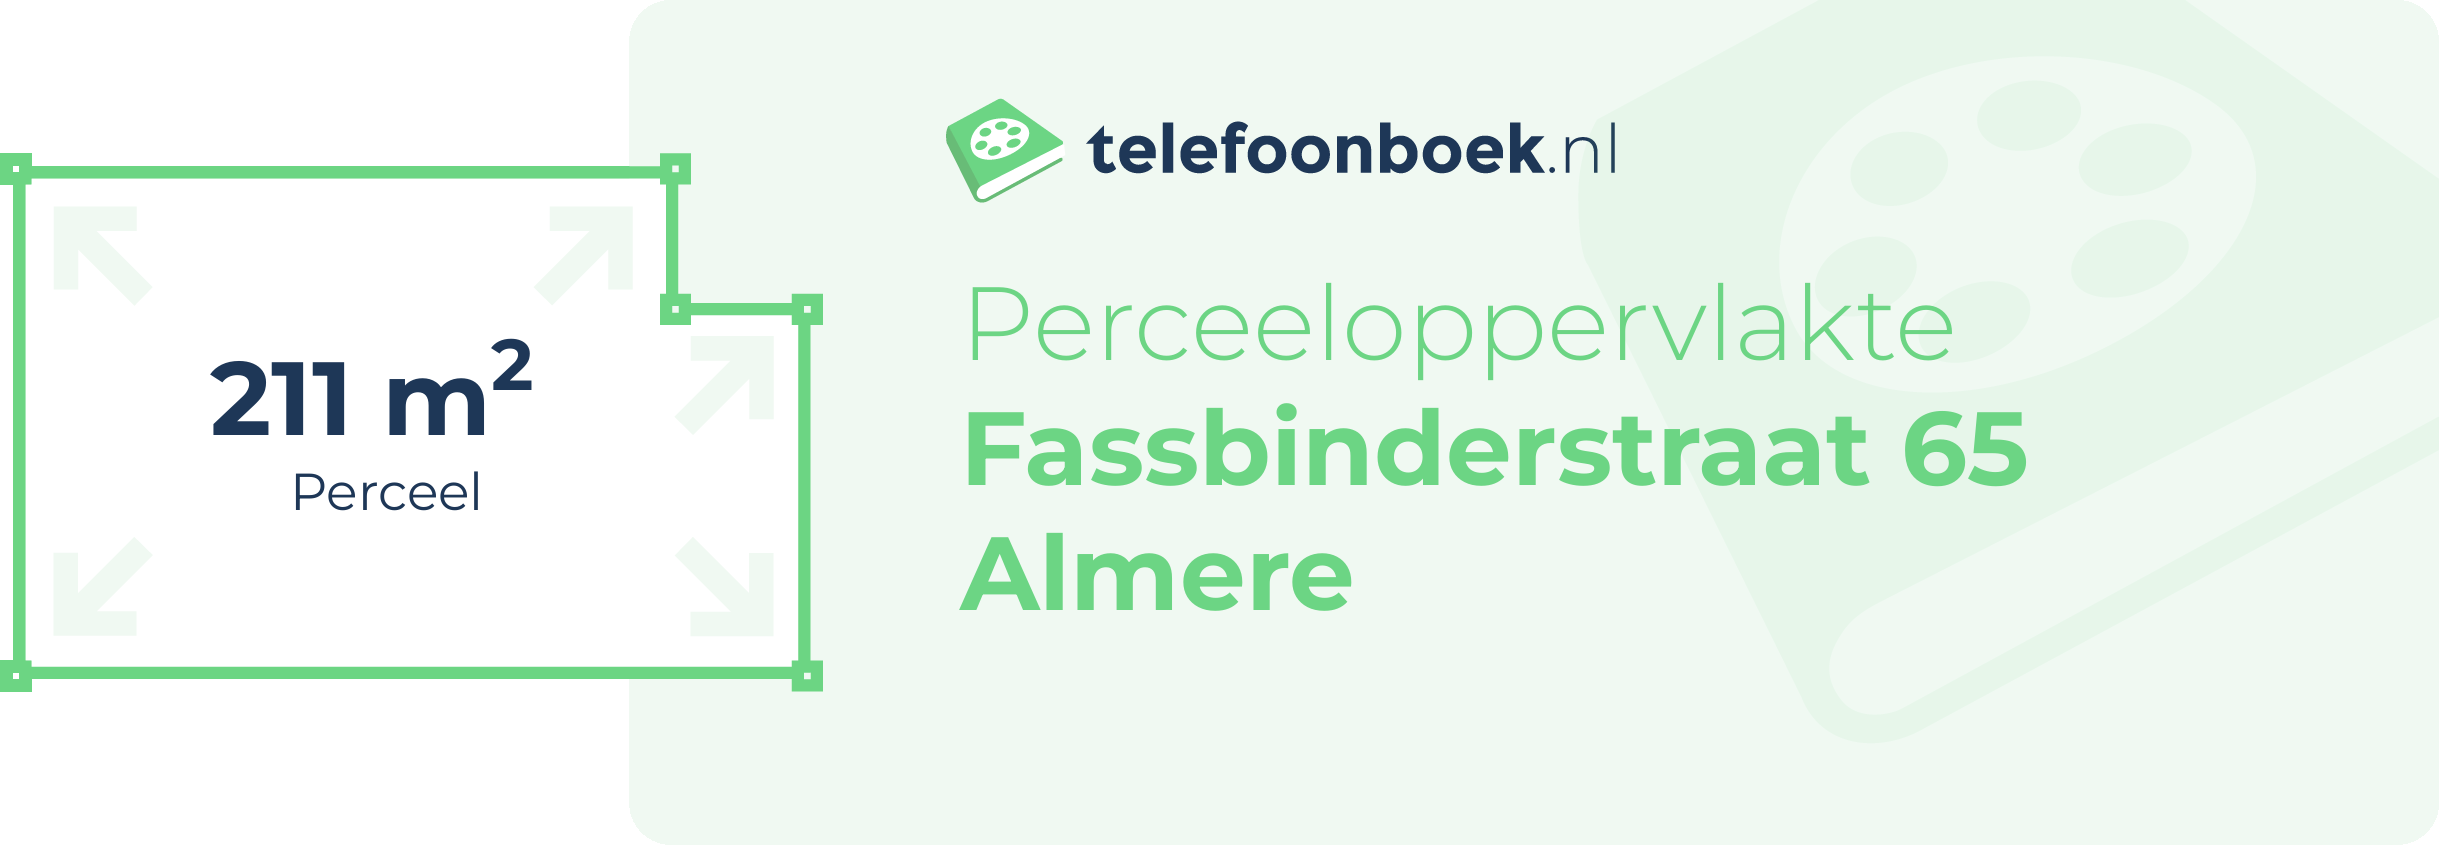 Perceeloppervlakte Fassbinderstraat 65 Almere